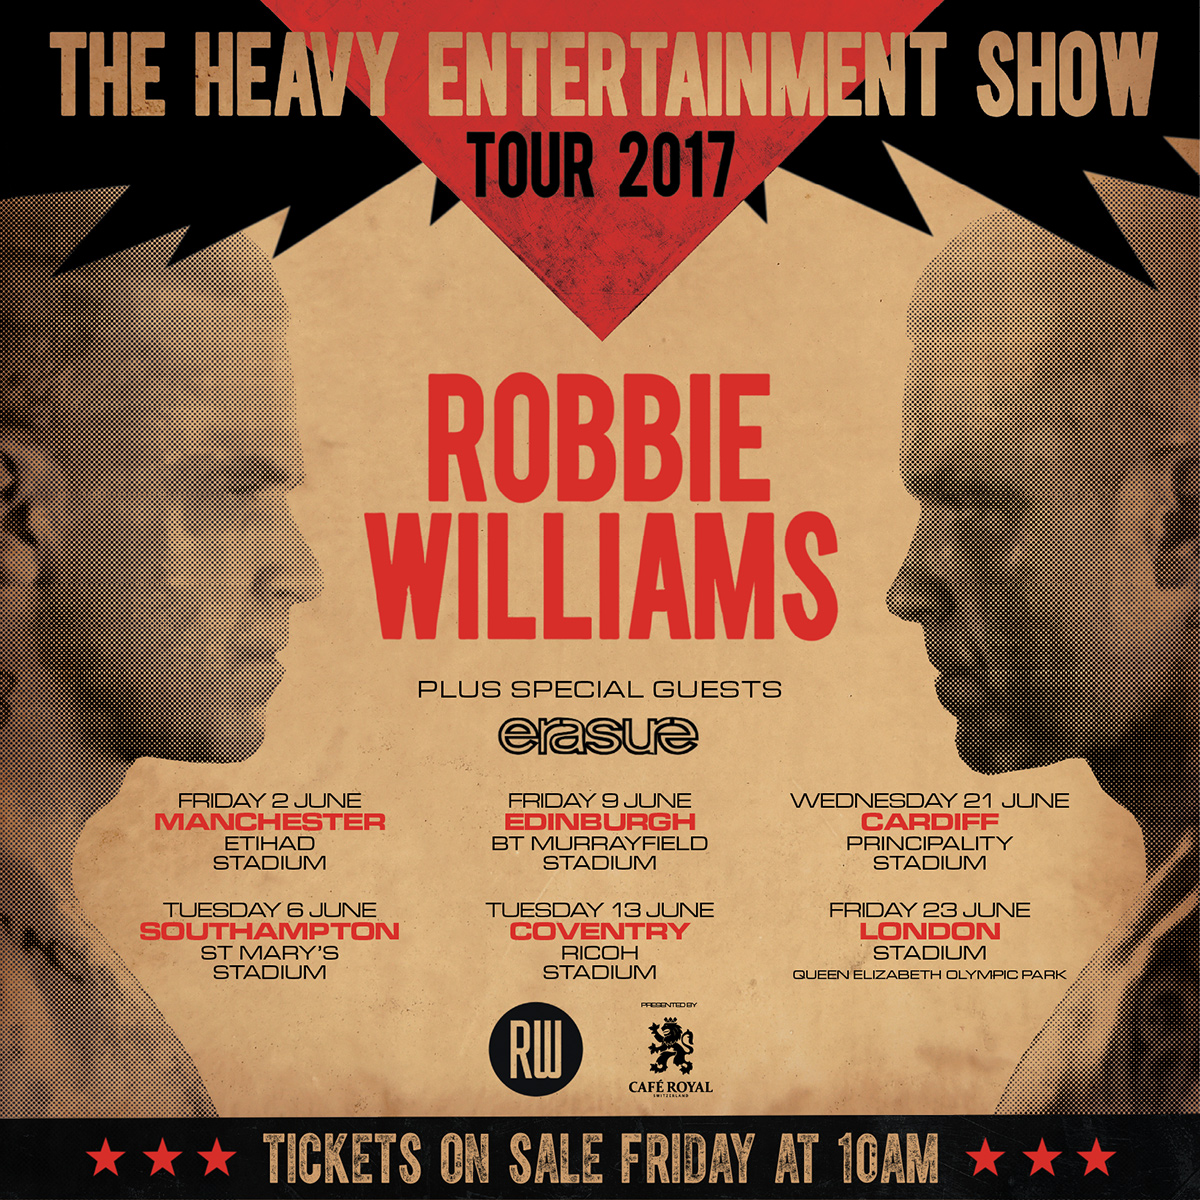 Robbie Williams announces 2017 stadium tour with special guest Erasure | Ticketmaster ...1200 x 1200